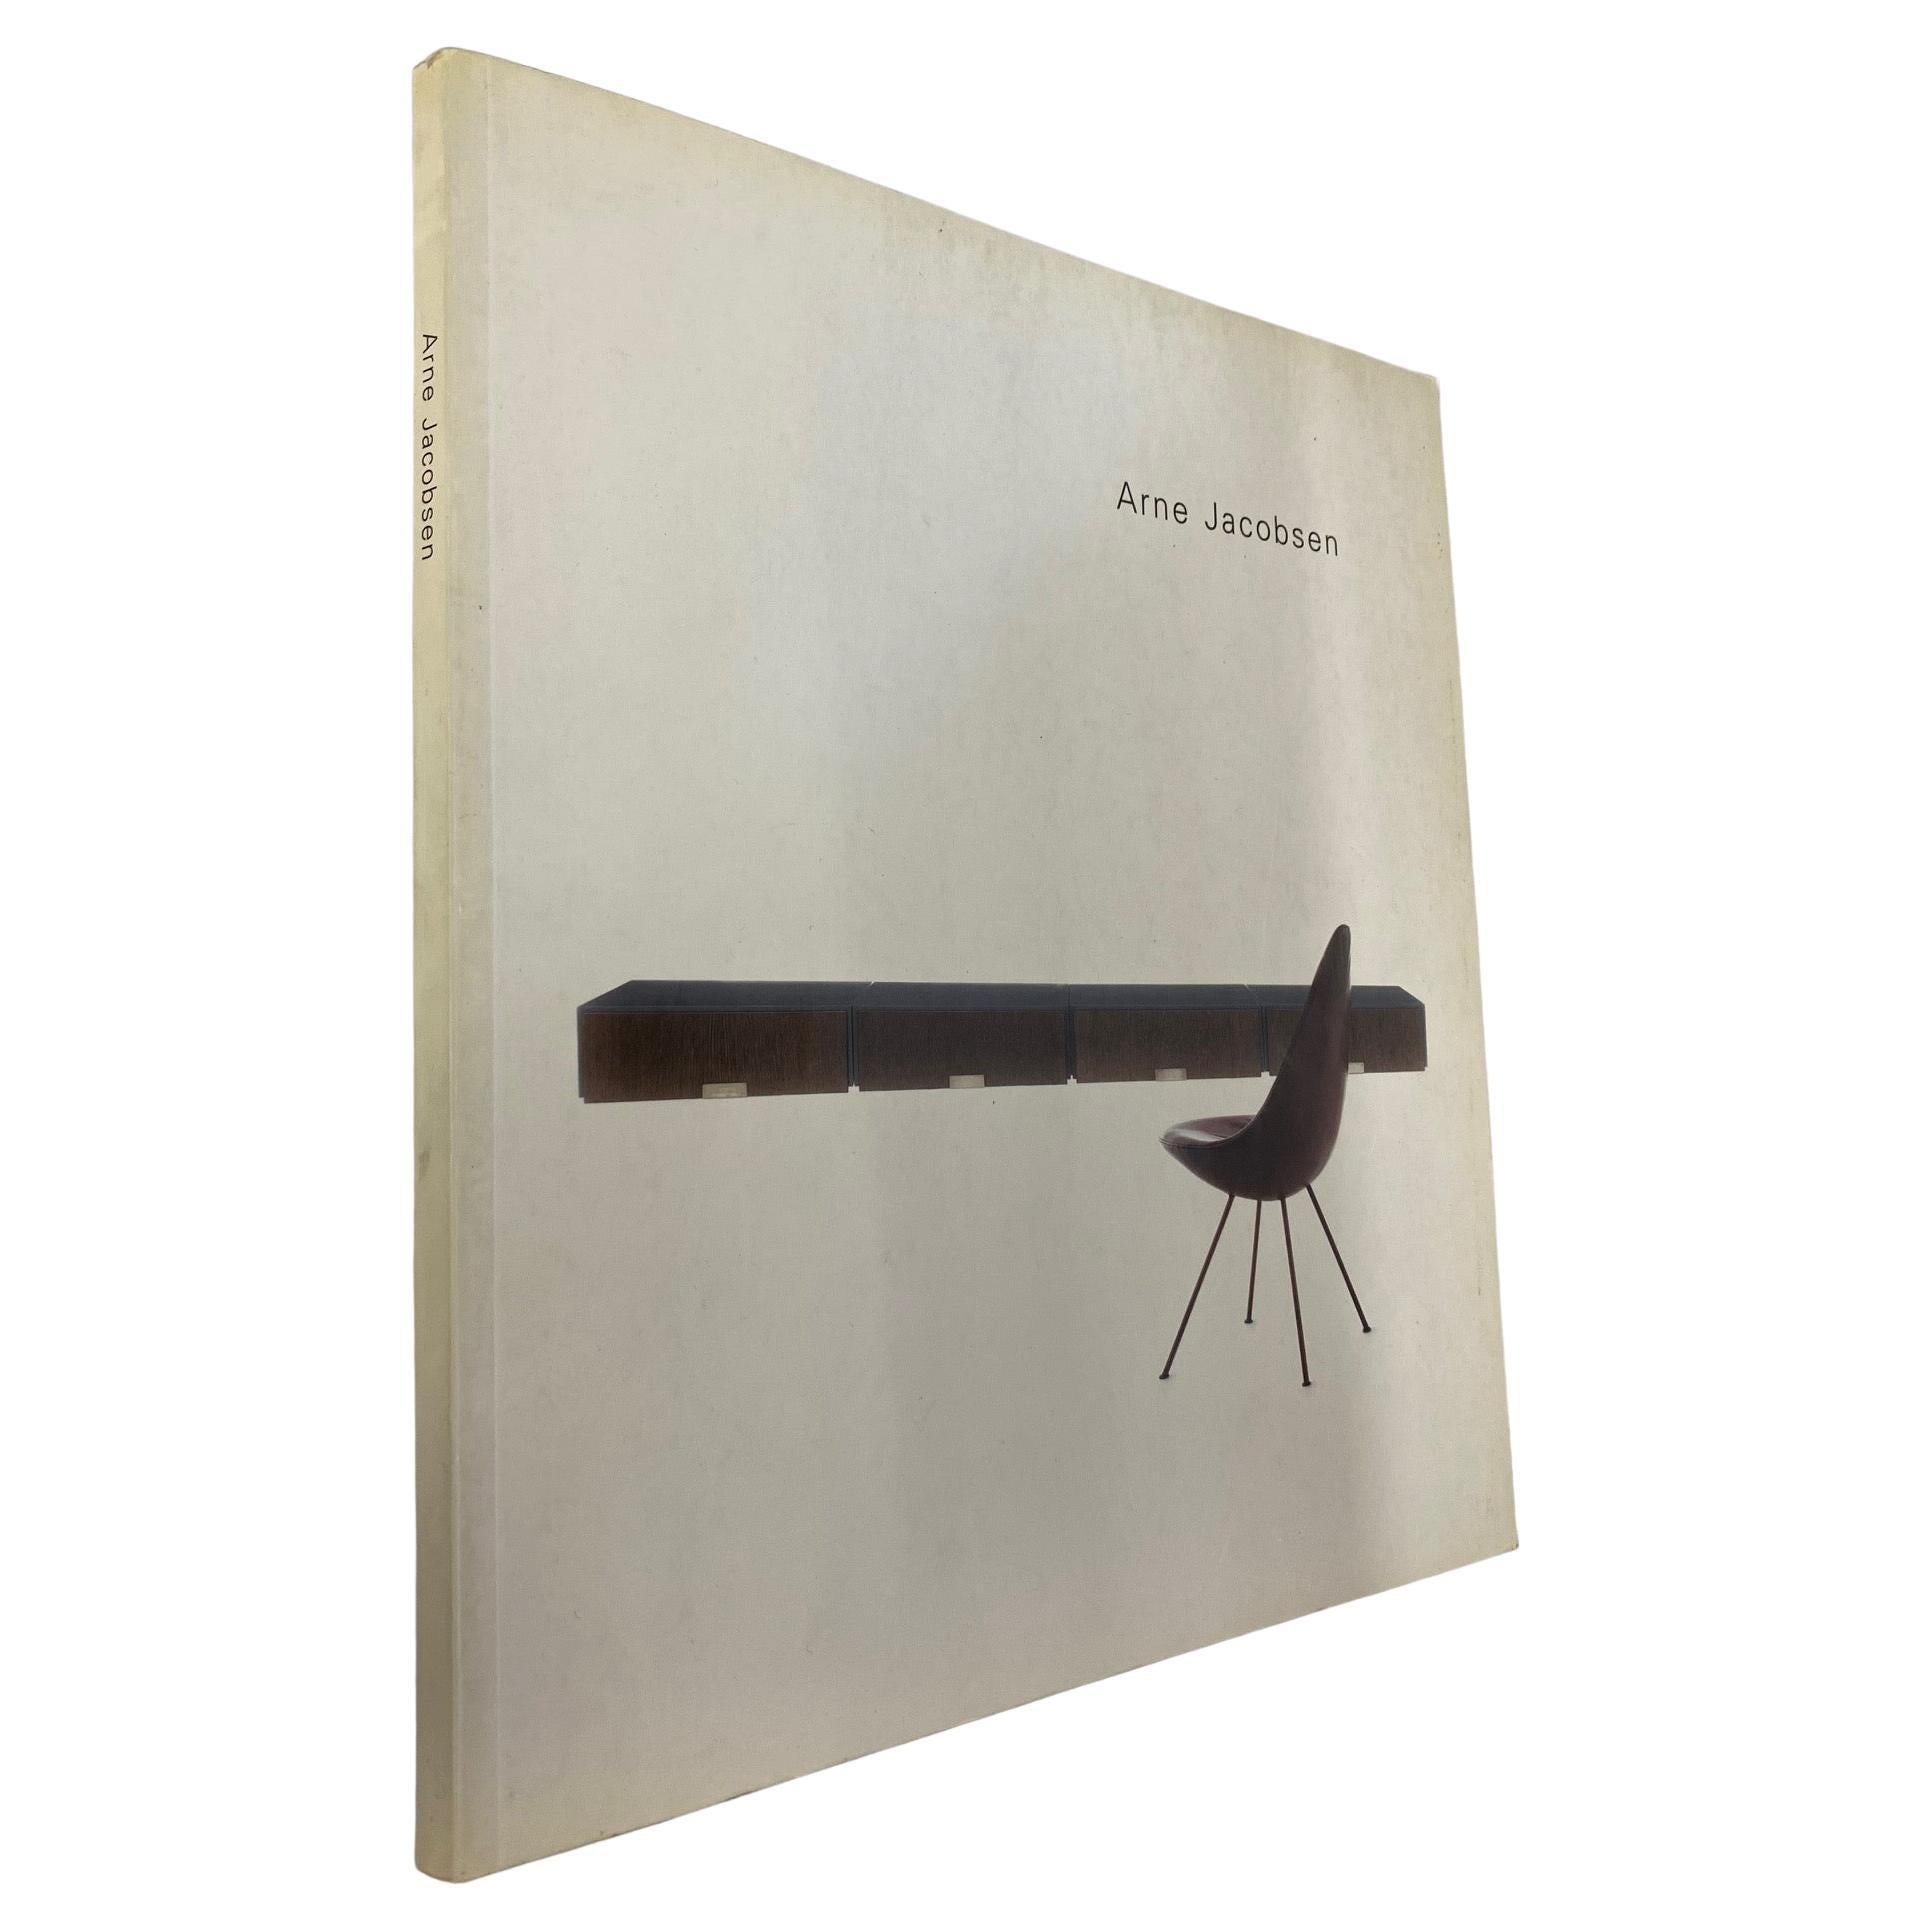 Arne Jacobsen (Book) For Sale